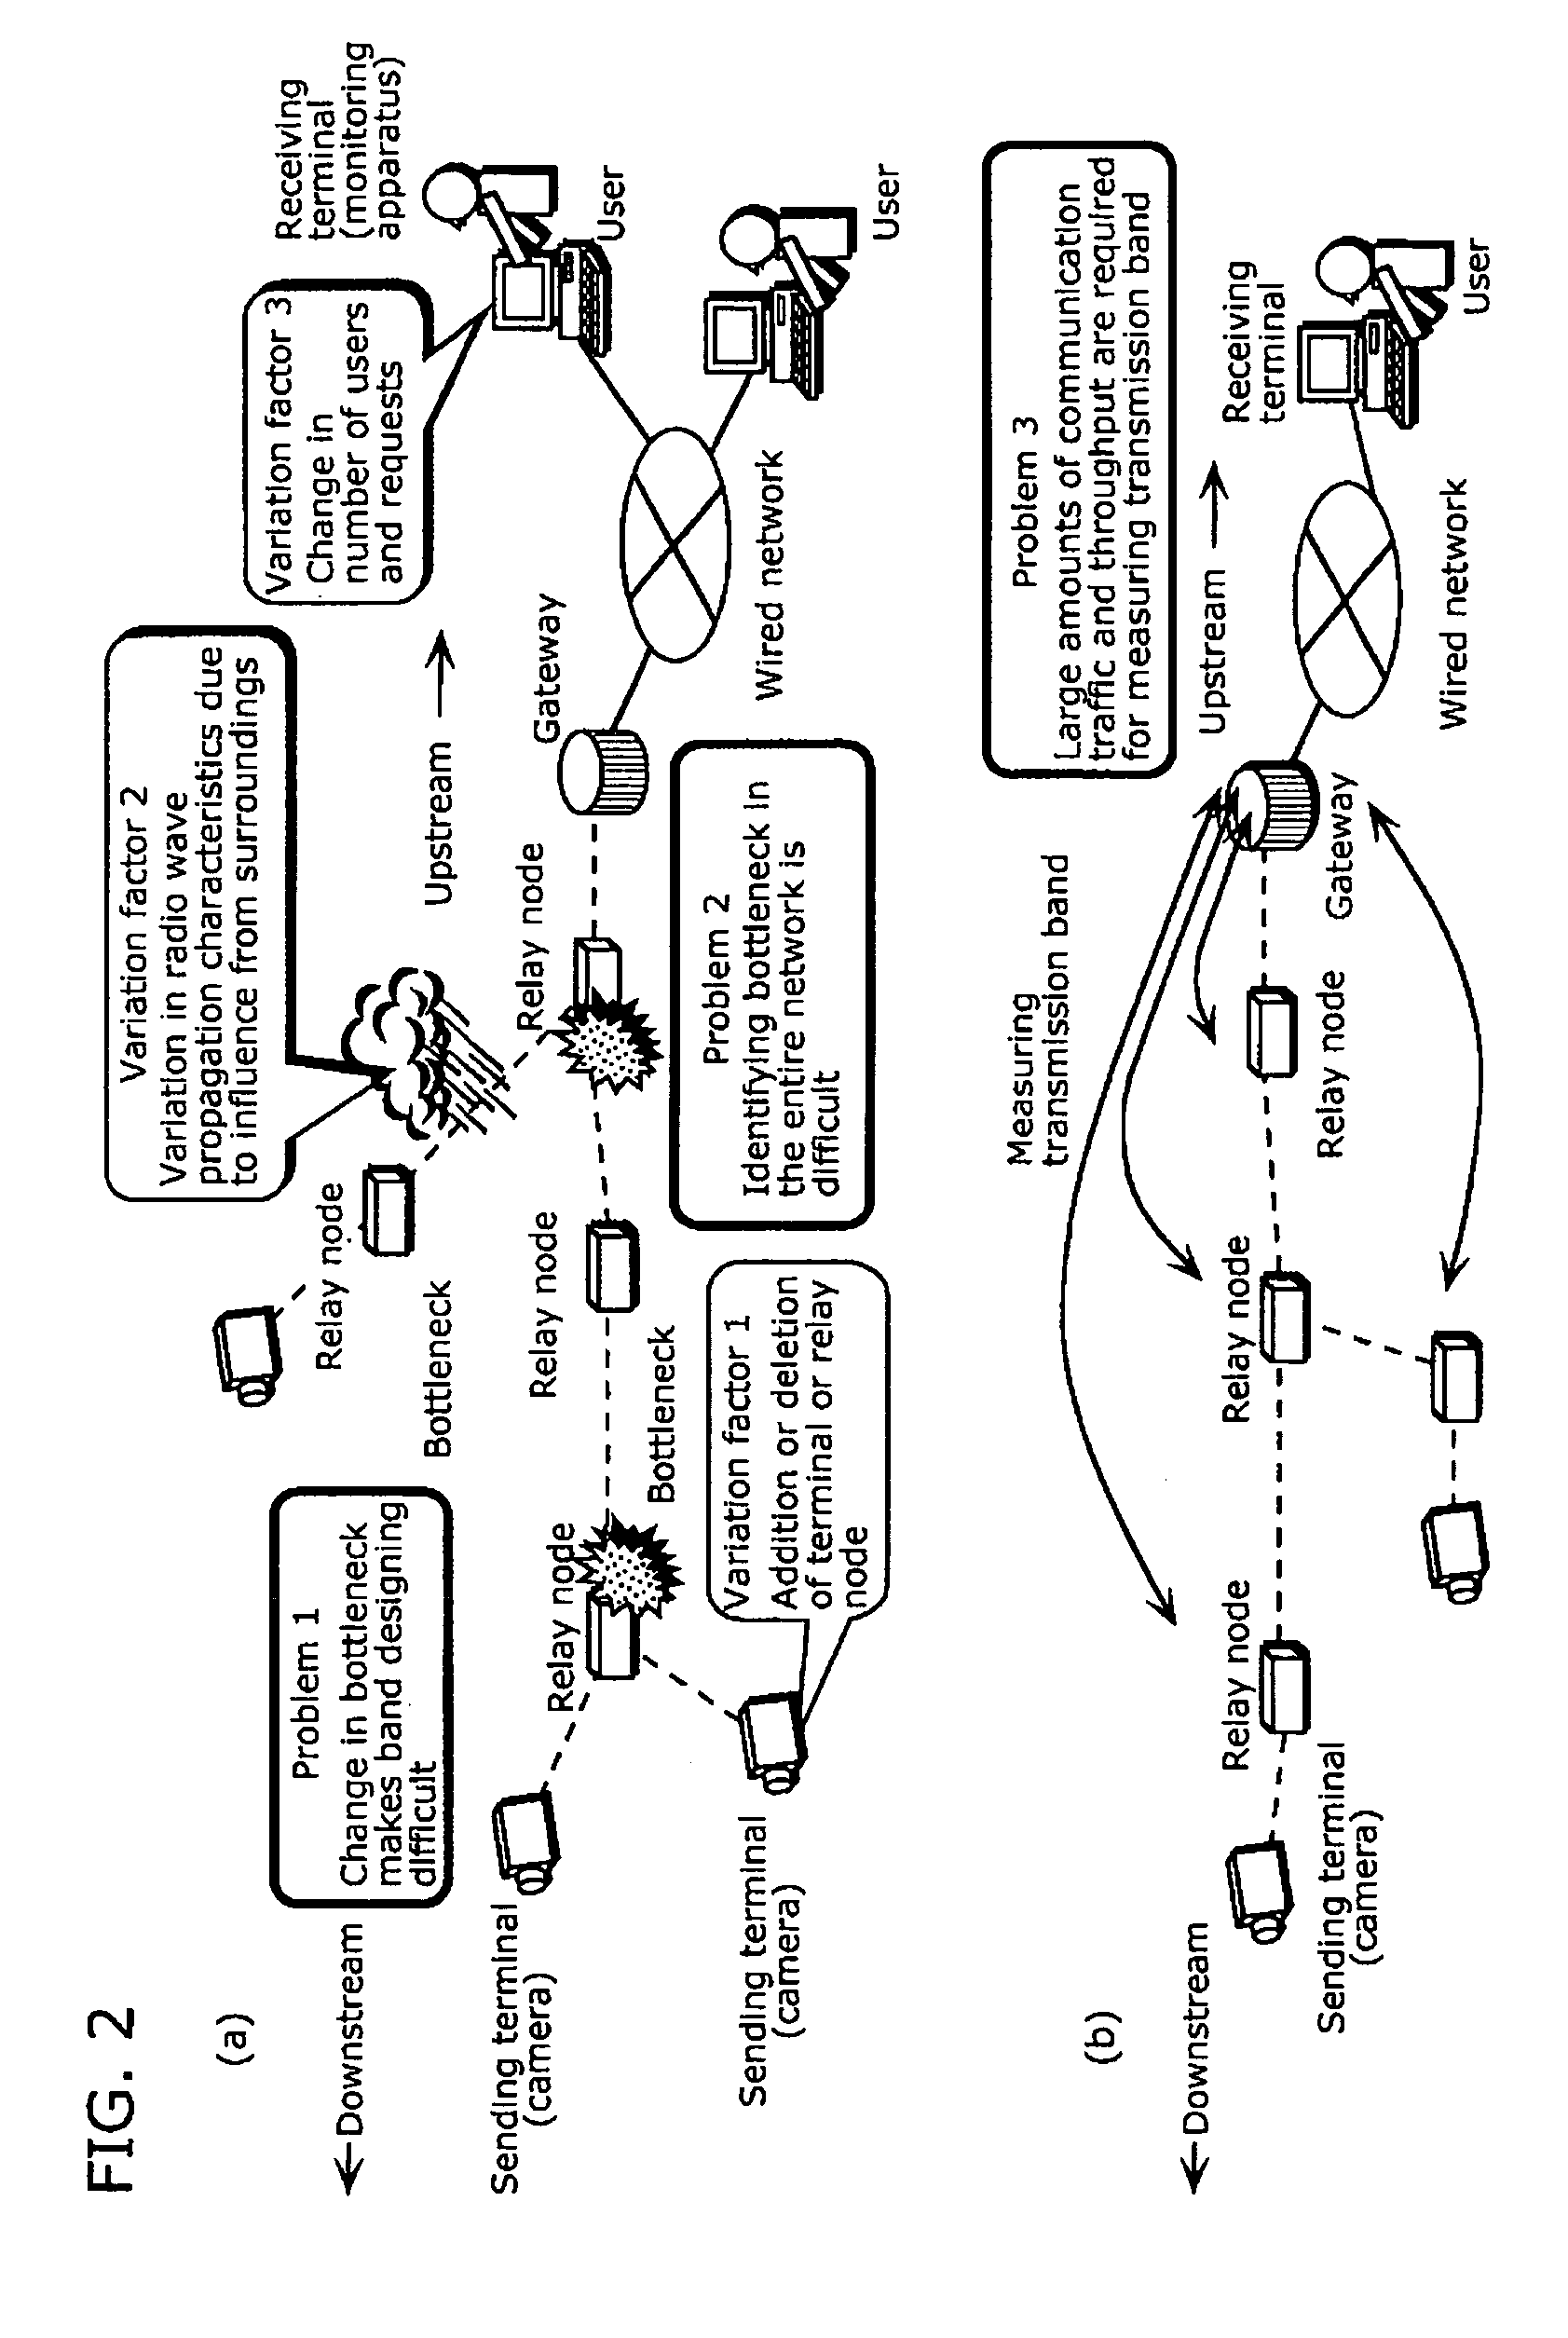 Network control apparatus, method, and program